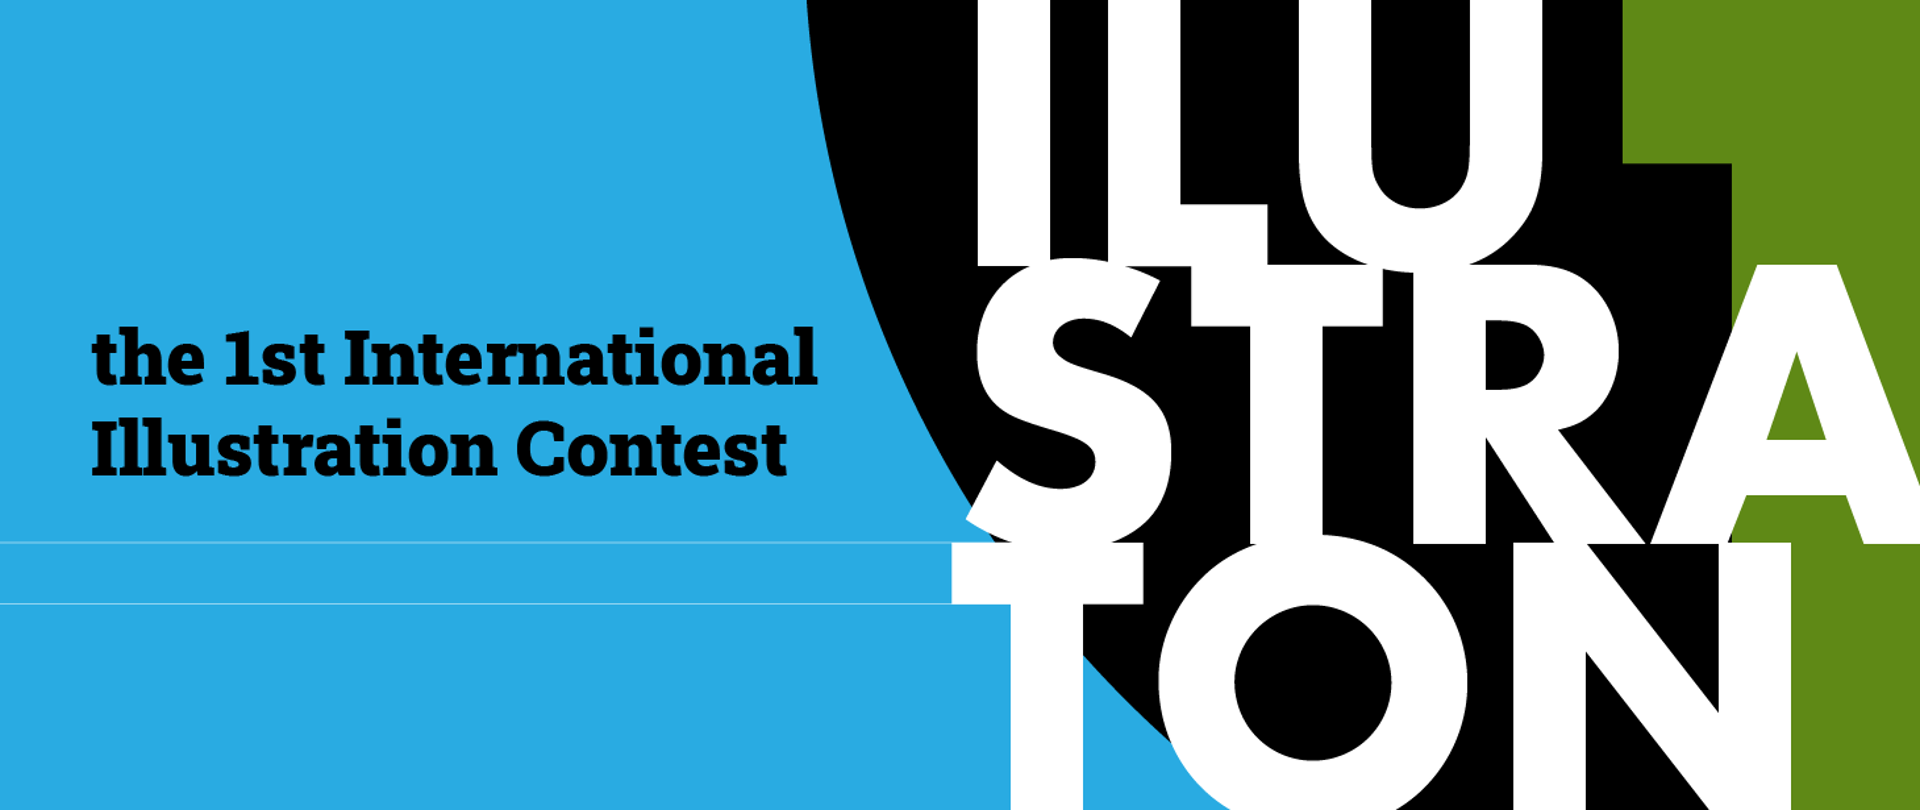 the 1st International Illustration Contest